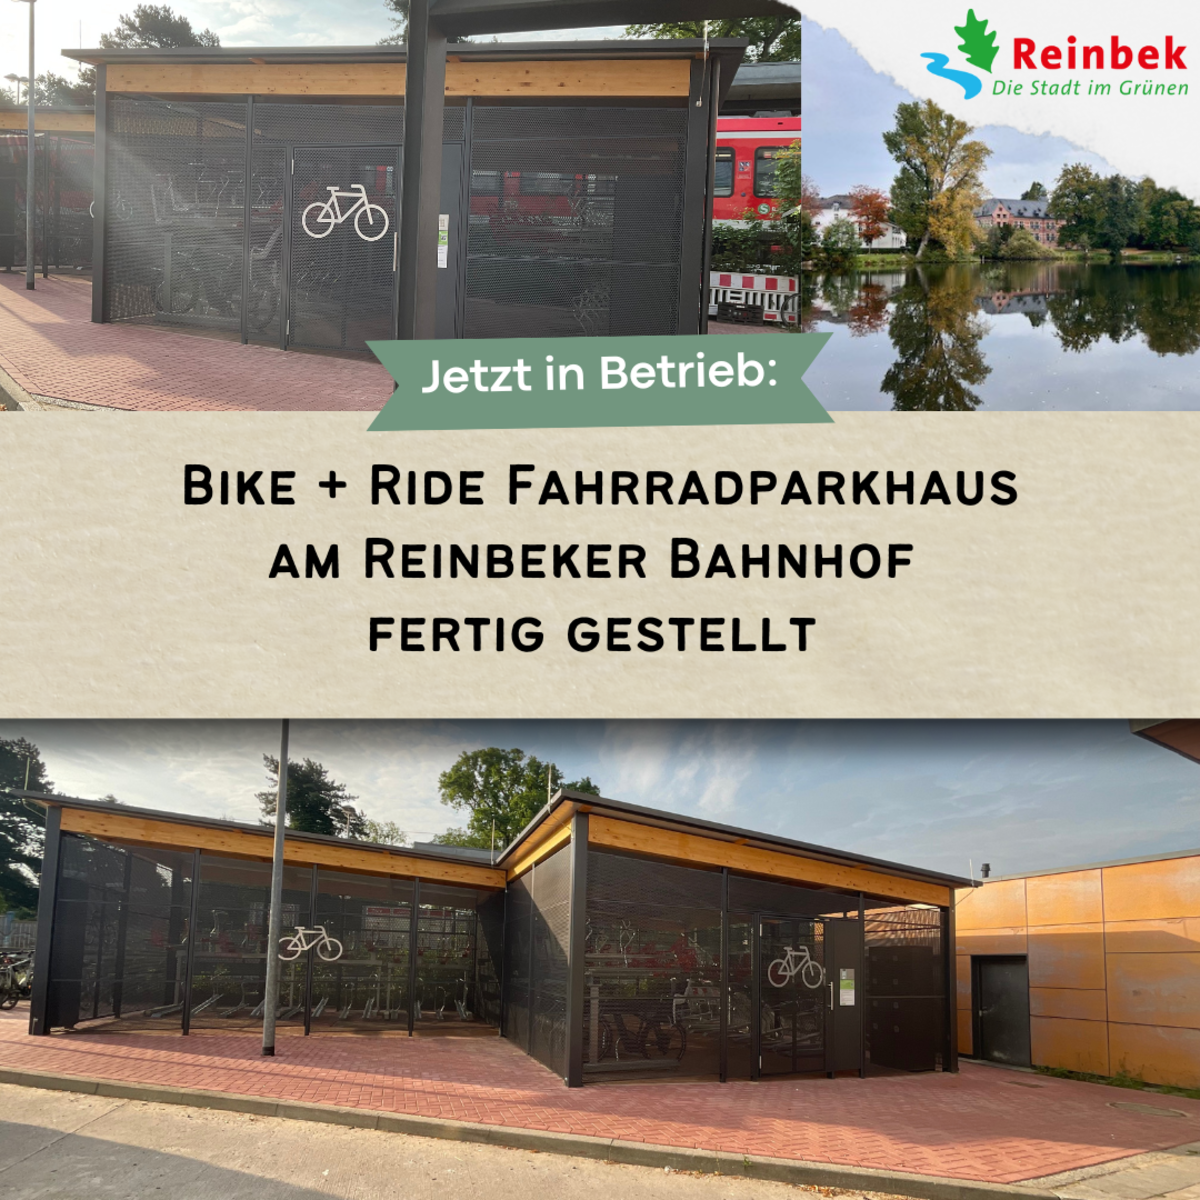 Das Fahrradparkhaus am Reinbeker Bahnhof